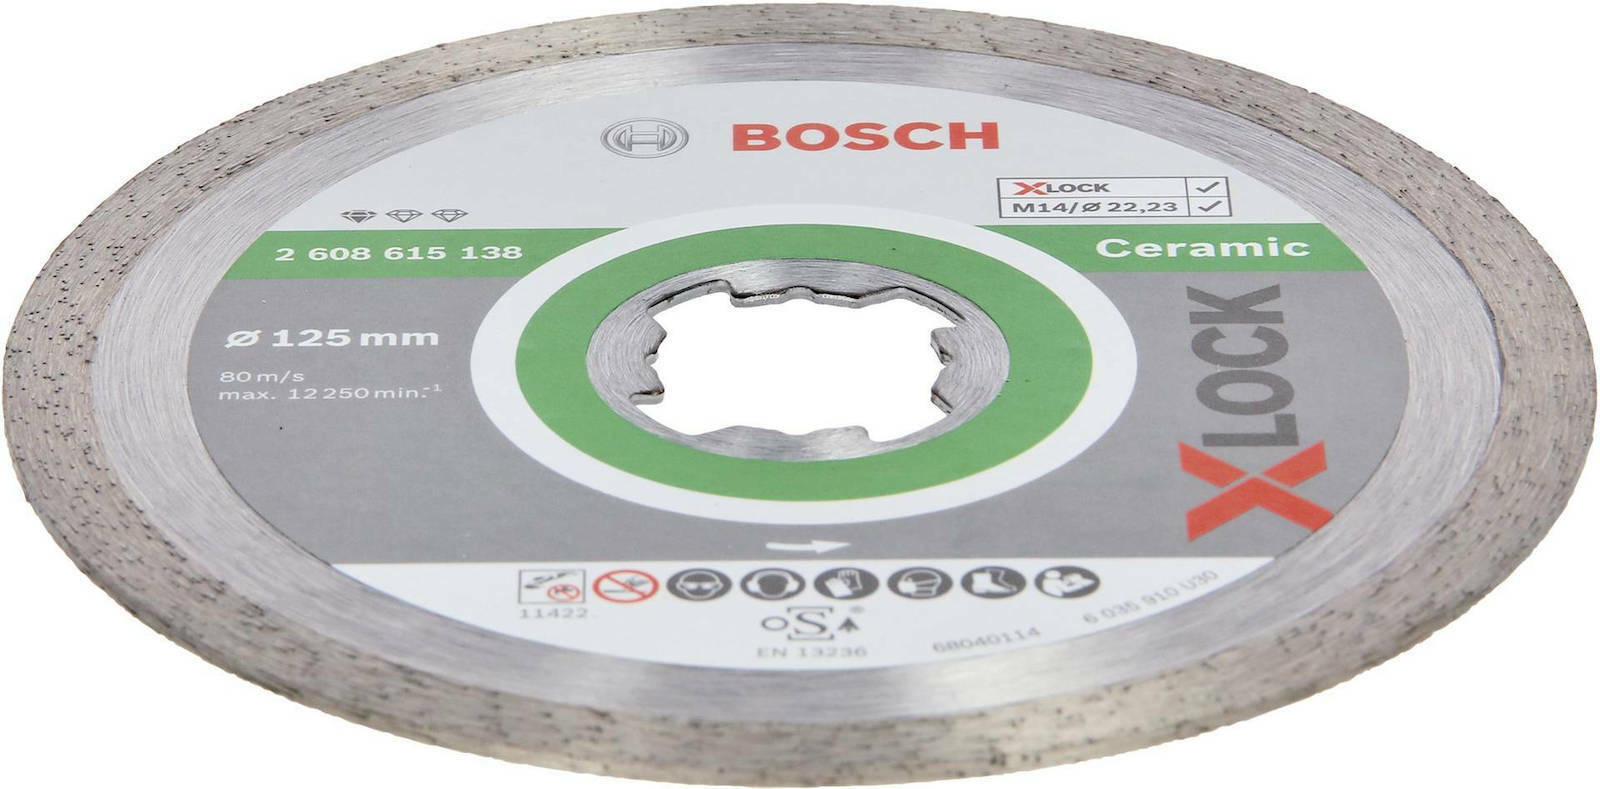 Bosch Διαμαντόδισκος Κοπής X-Lock Standard Ceramic 2608615138